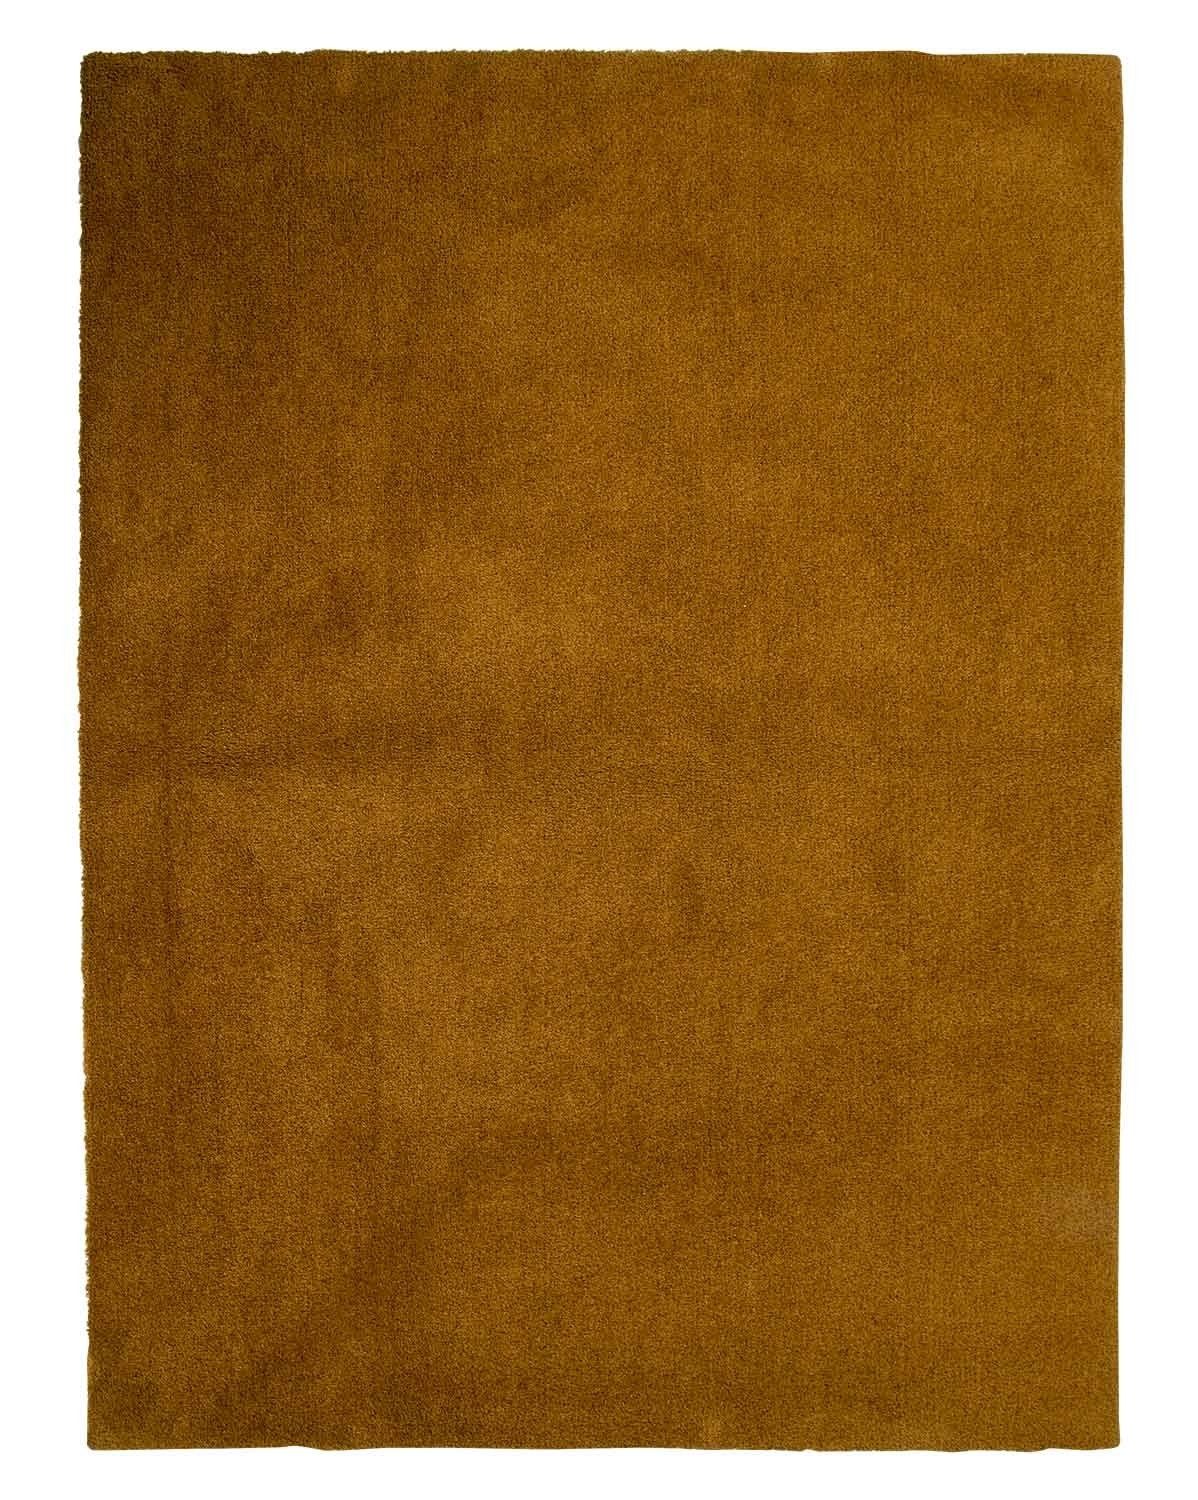 mm rechteckig, Rugs, Teppich Polyester, FEEL x Höhe: COSY, cm, Balta 11 150 Senffarben, 80